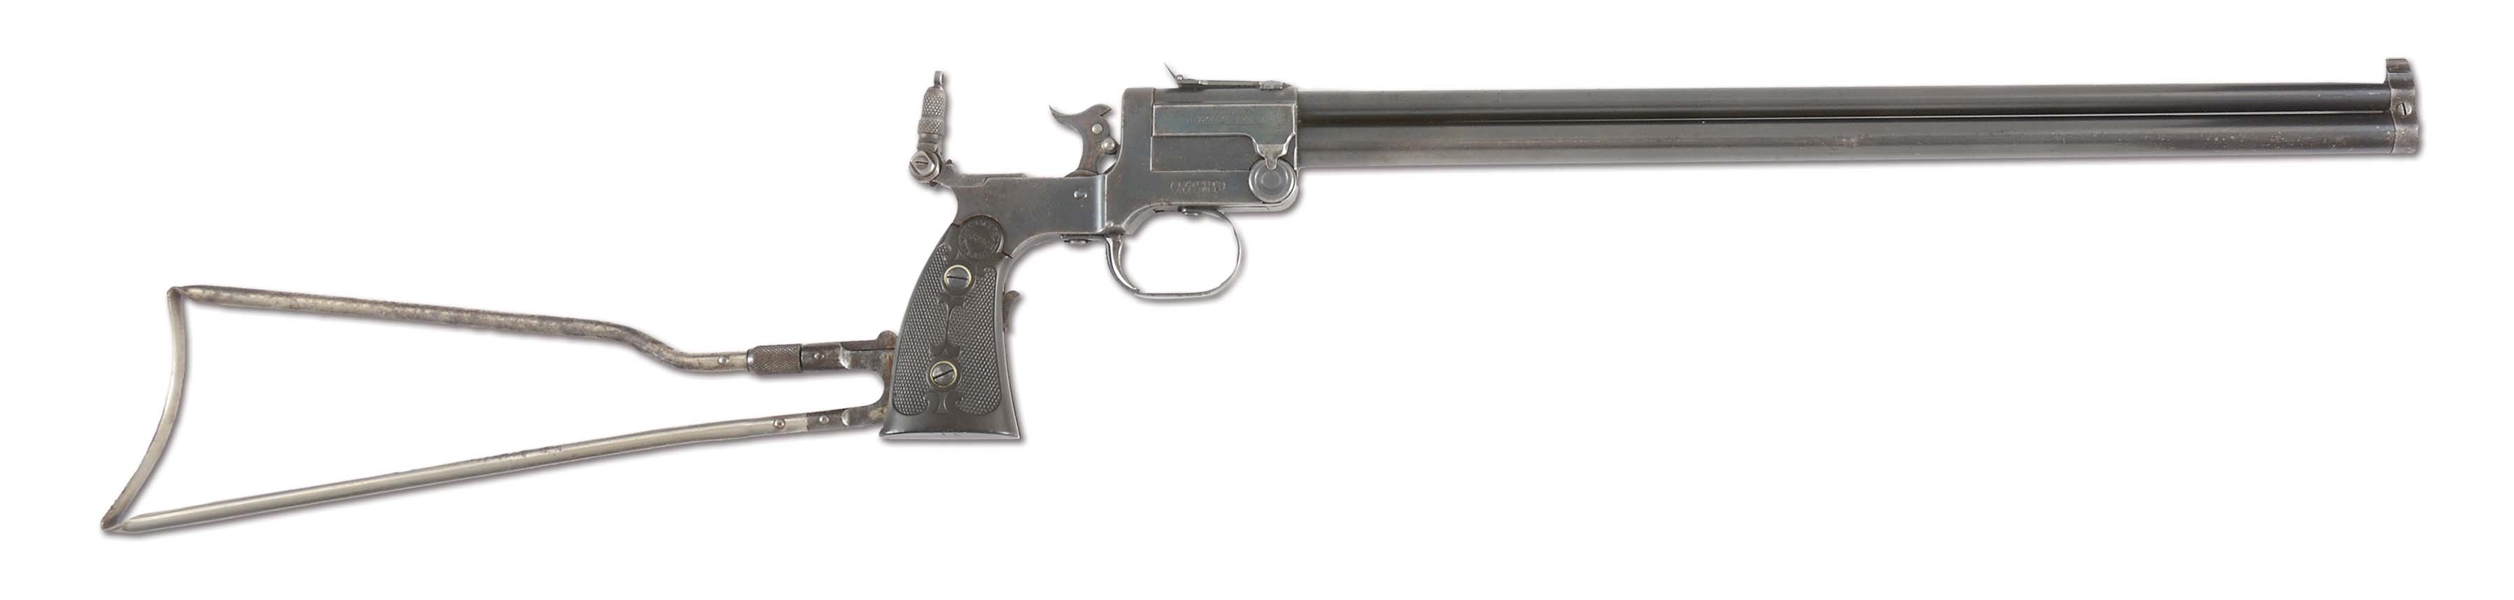 (C) MODEL 1908 MARBLE ARMS GAME GETTER OVER/UNDER SHOTGUN/RIFLE COMBINATION GUN.